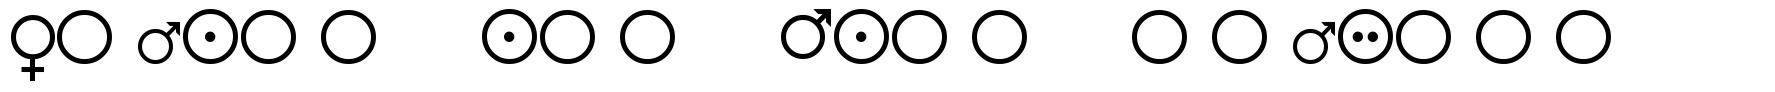 Female and Male Symbols font